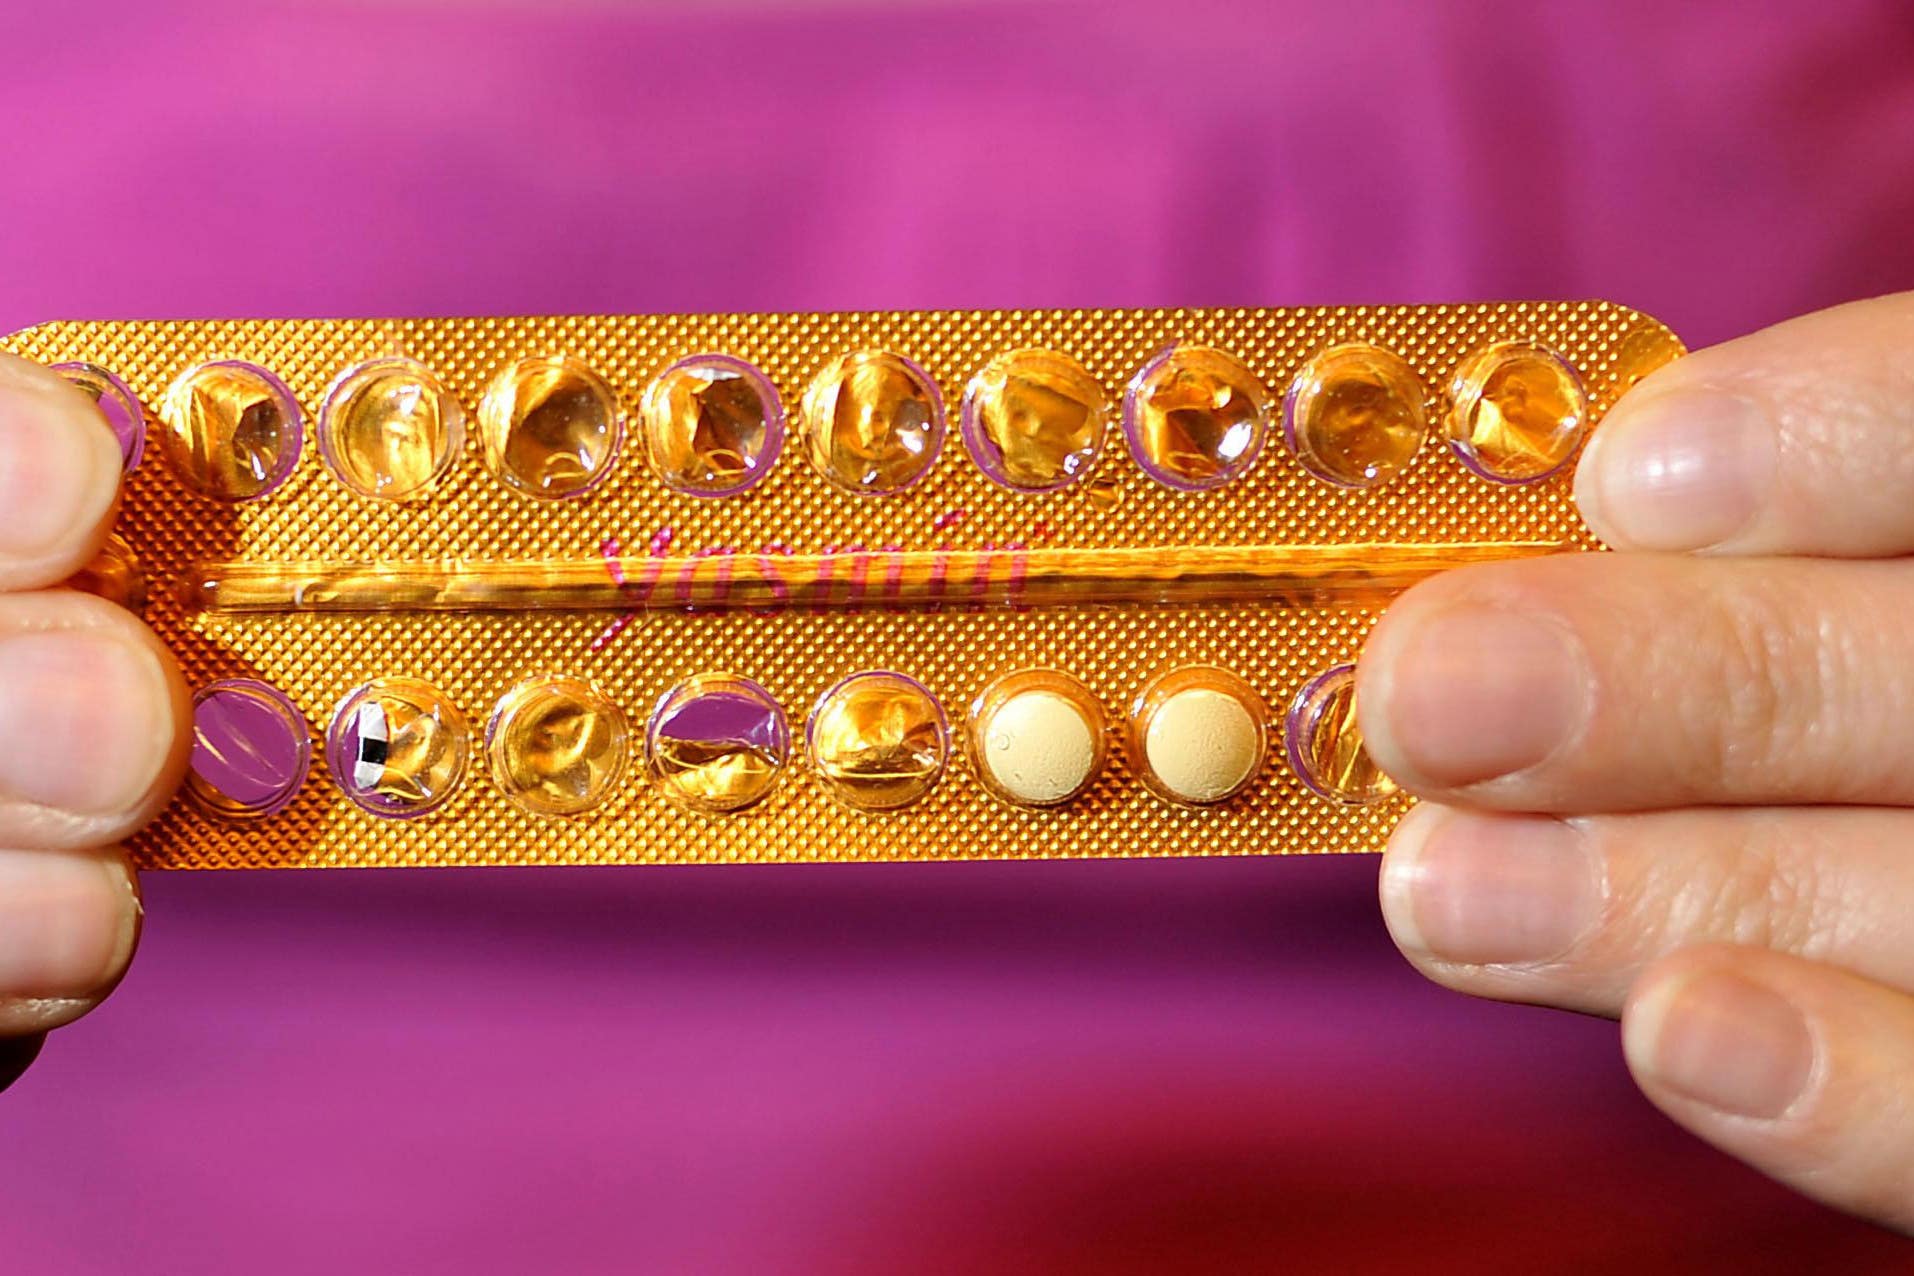 Yaz and Yasmin birth control pills linked to 23 deaths: Health